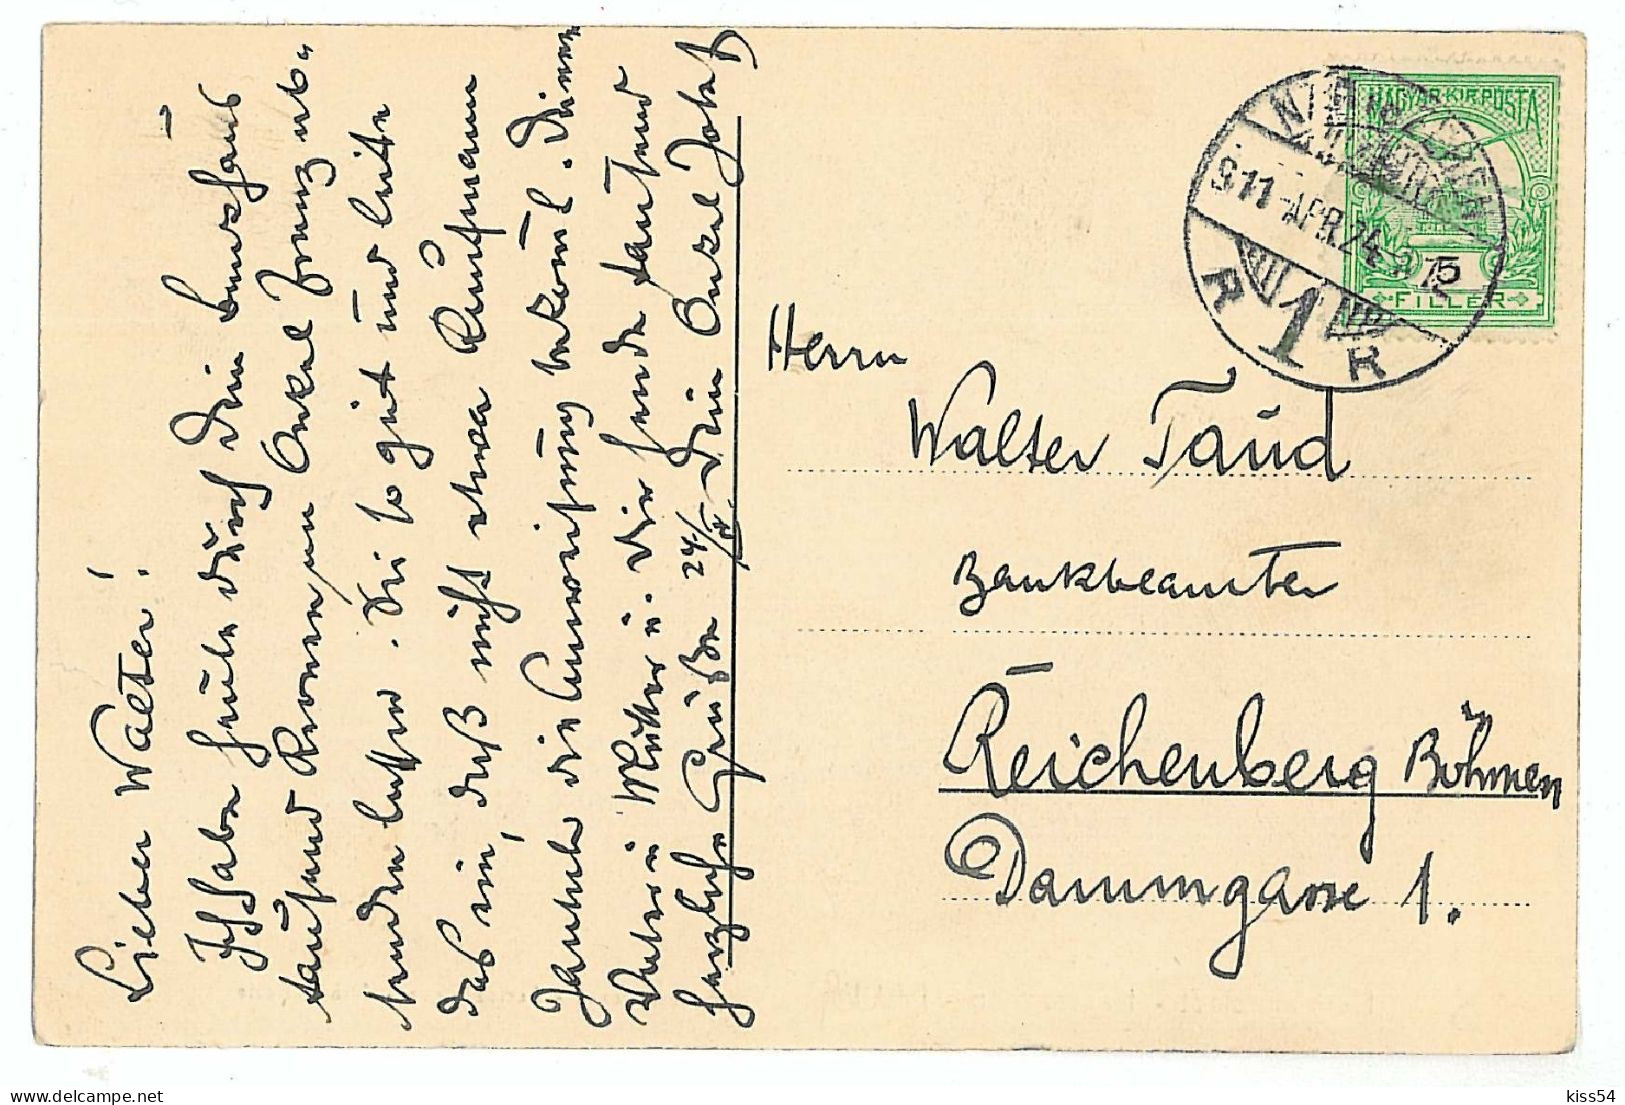 RO 86 - 7308 SIBIU, Romania, Street Sevis, Tramway - Old Postcard - Used - 1911 - Roumanie